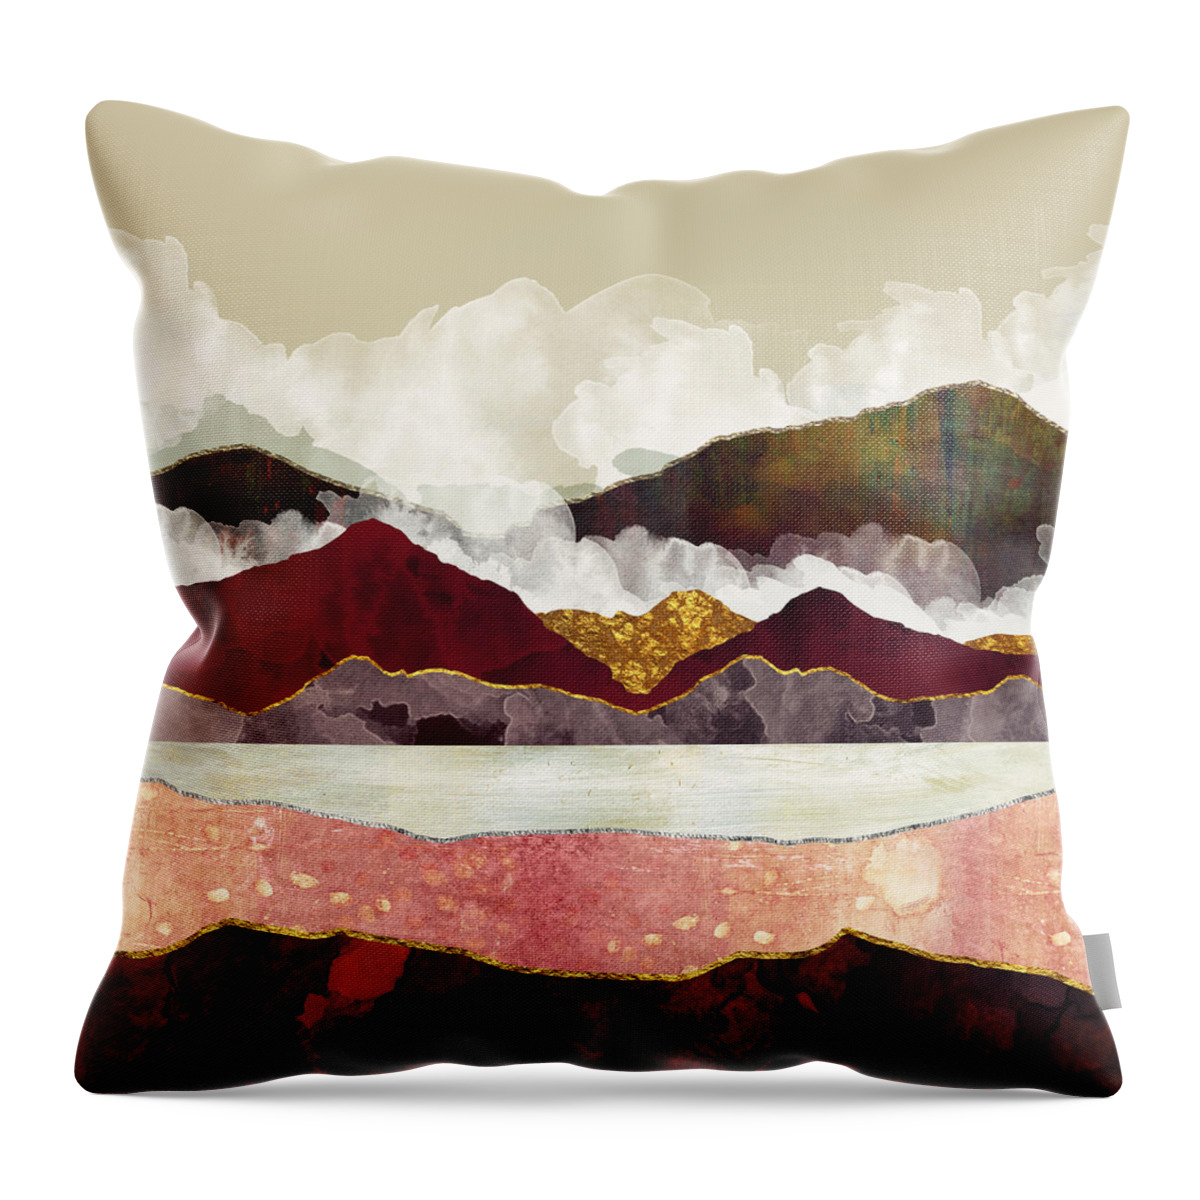 Mountains Throw Pillow featuring the digital art Melon Mountains by Katherine Smit